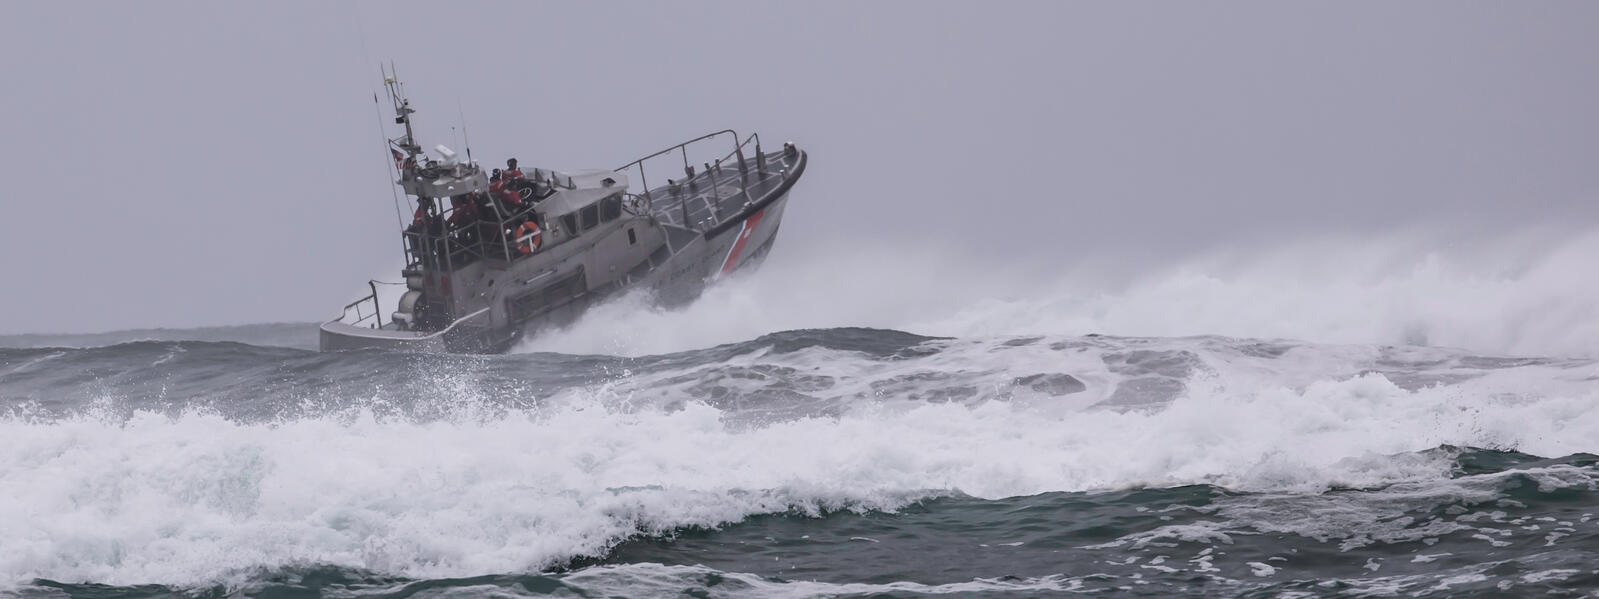 Coast guard vessel in heavy storm conditions.